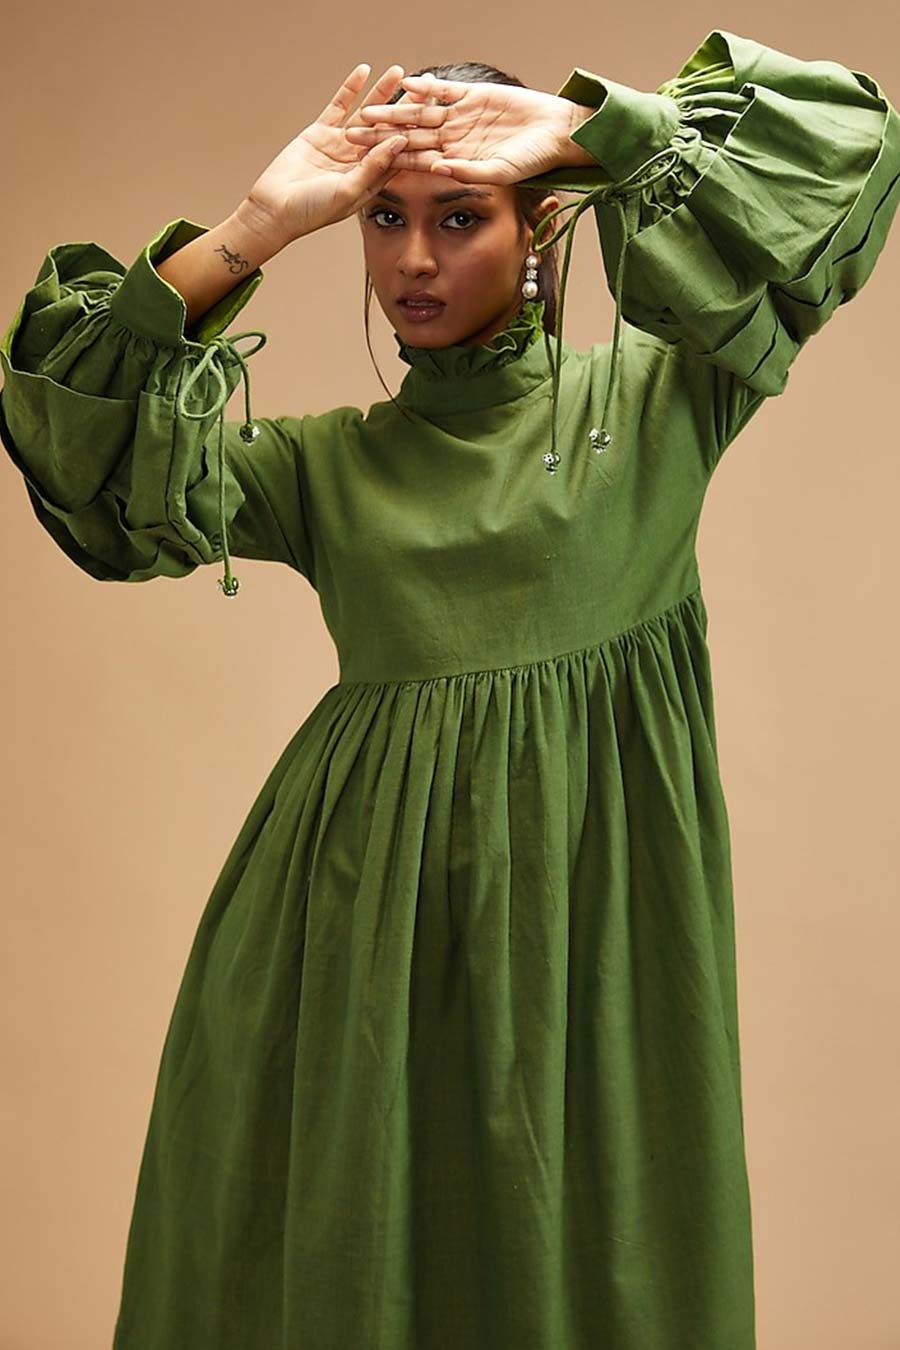 Basil Green Victorian Dress